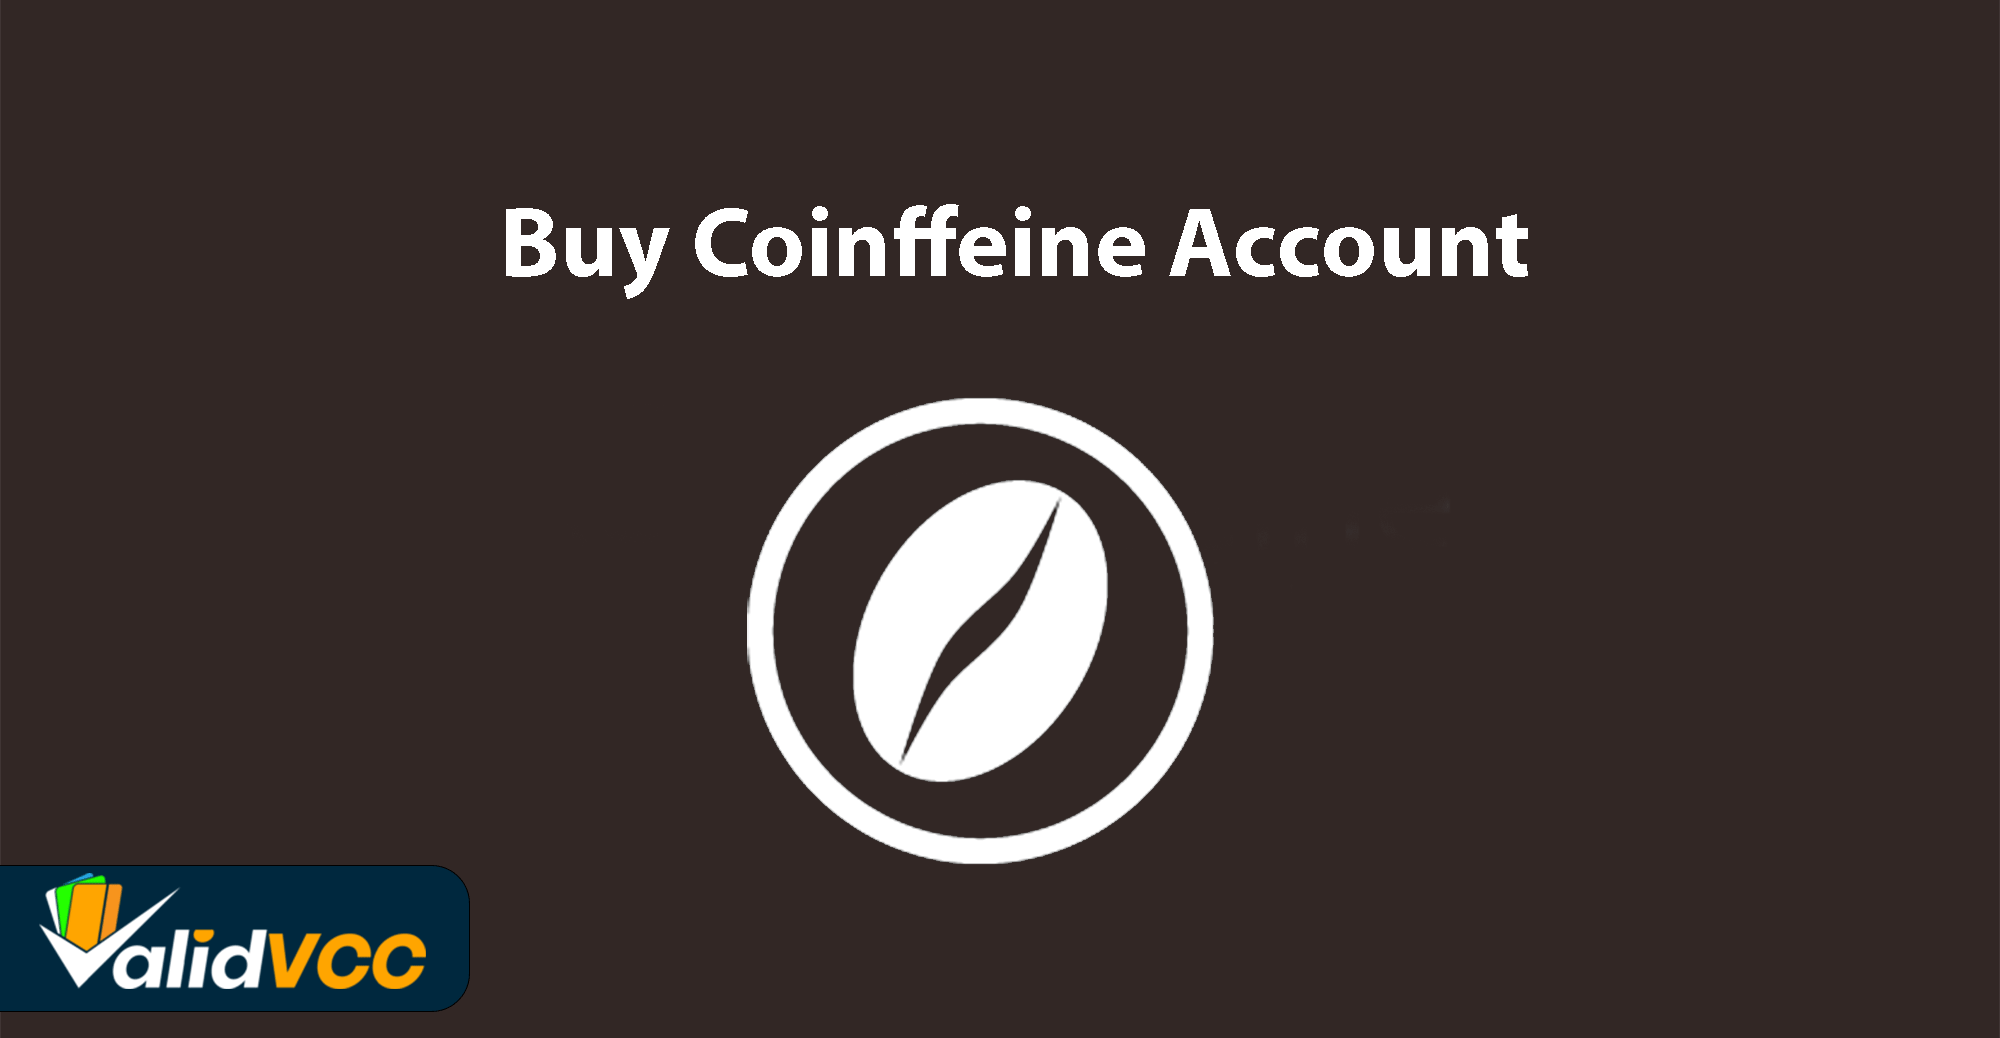 buy Coinffeine account, buy verified Coinffeine account, Coinffeine account for sale, best Coinffeine account, Coinffeine account to buy,